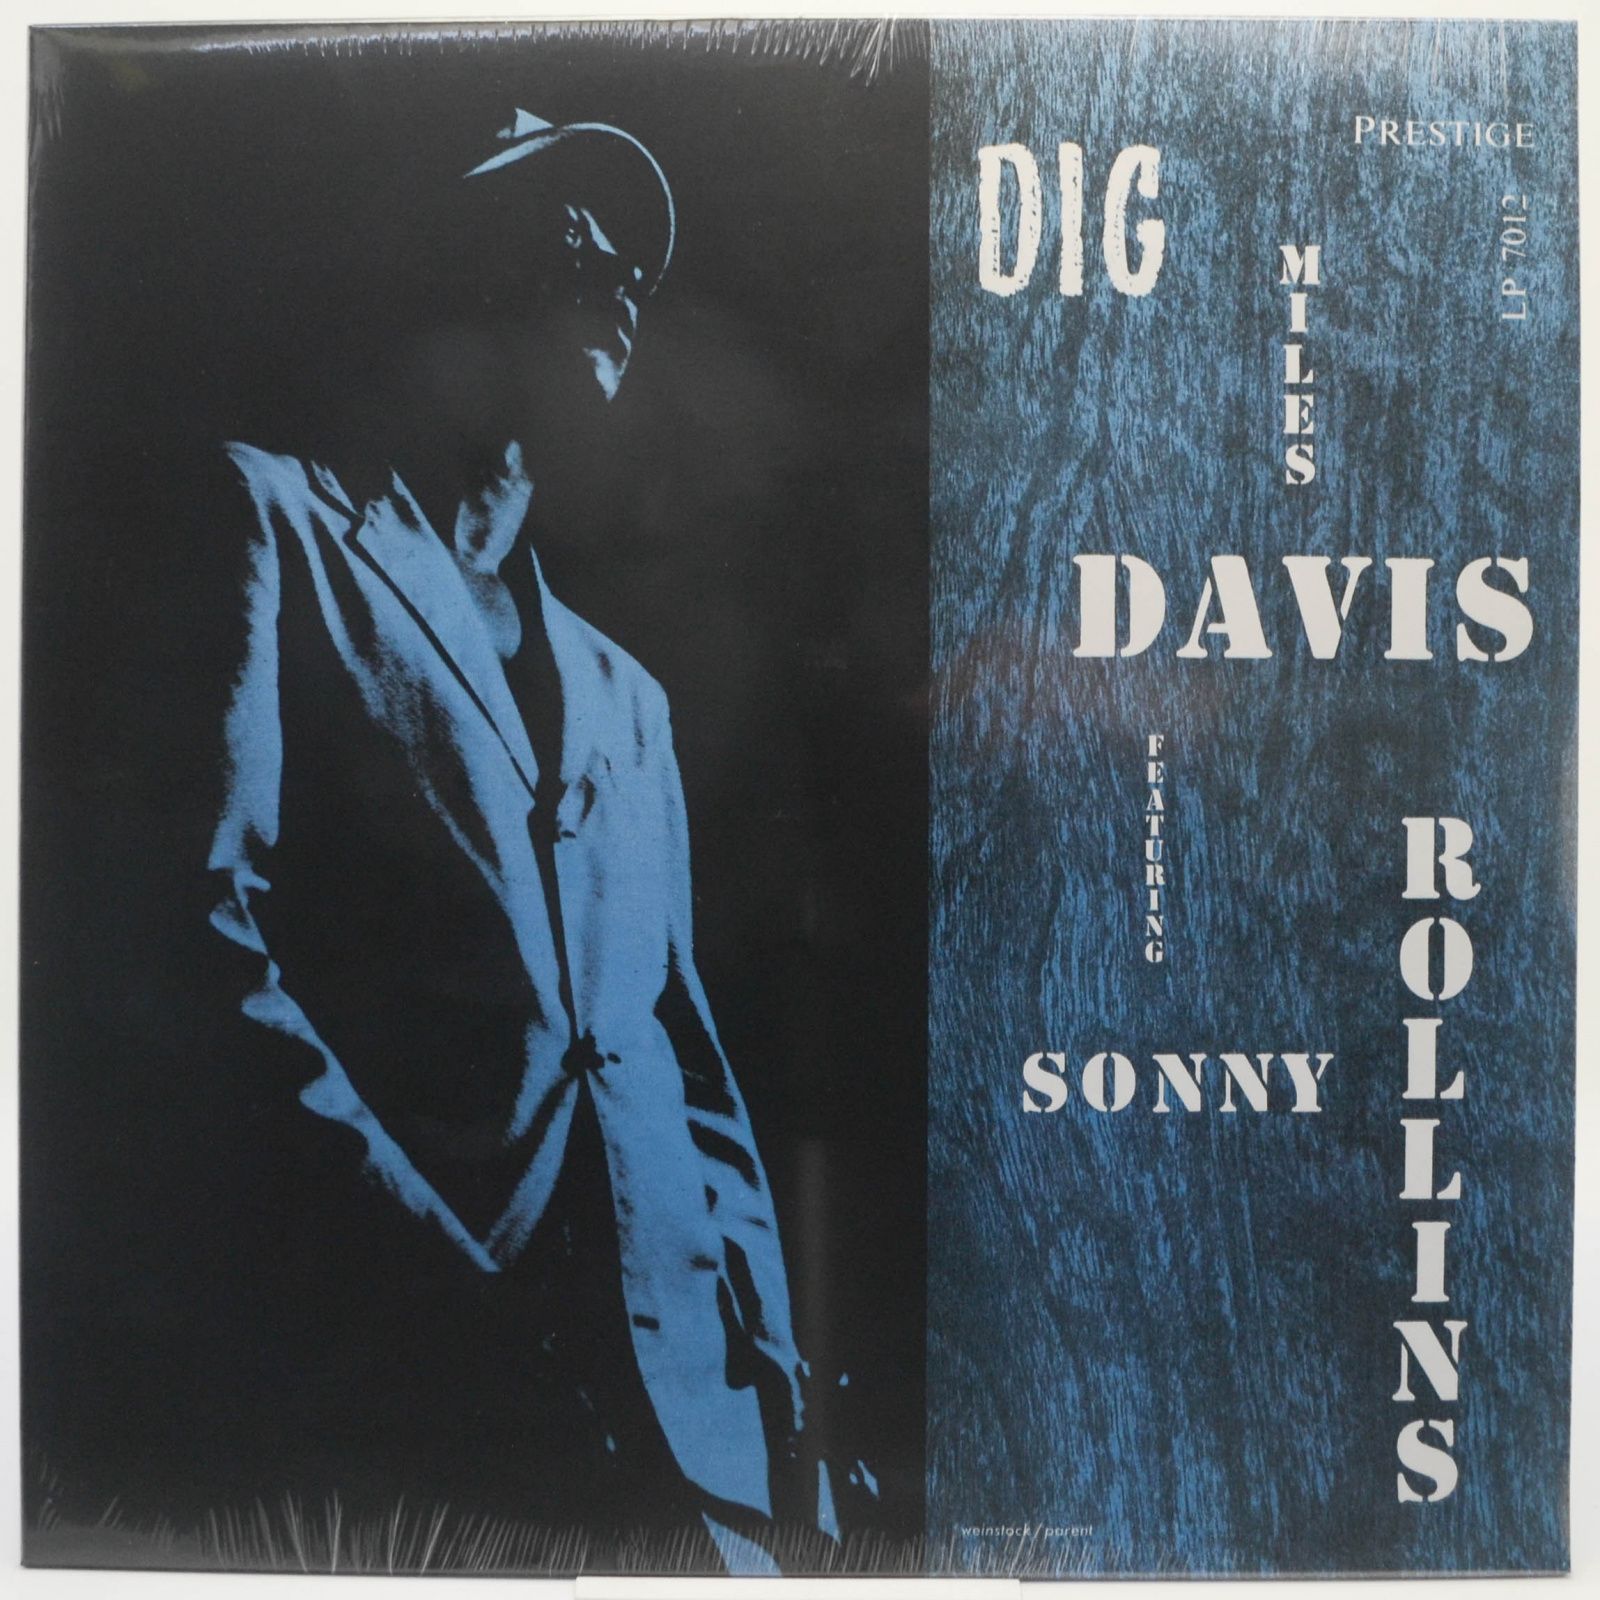 Miles Davis Featuring Sonny Rollins — Dig, 2014